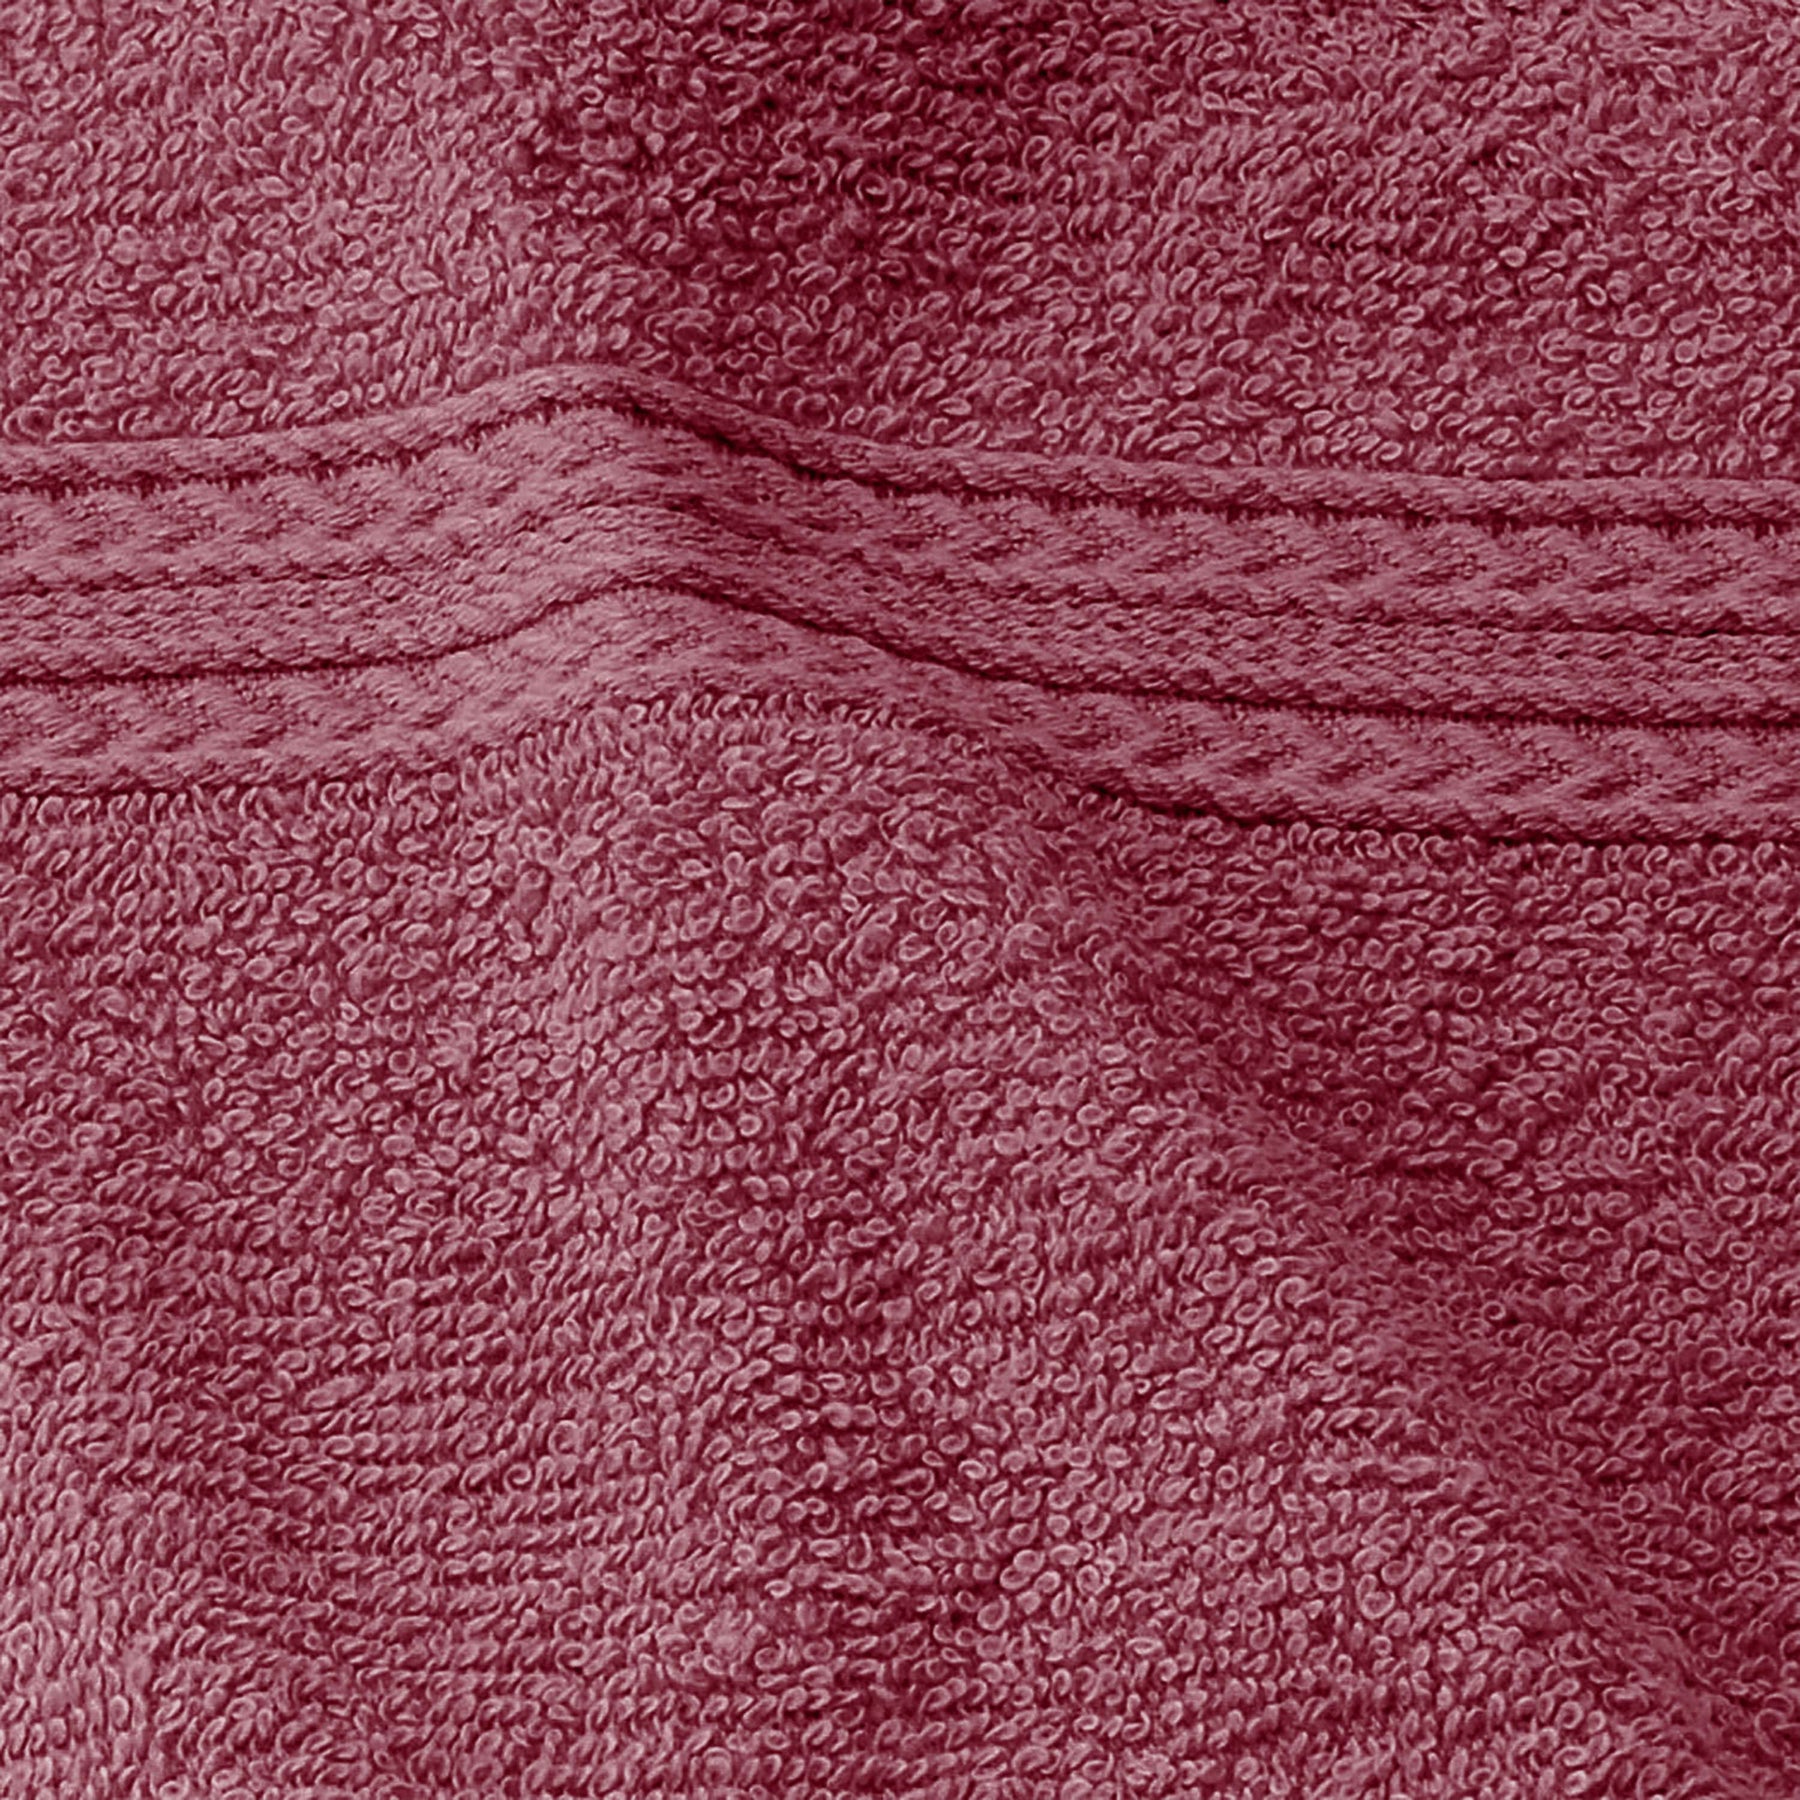 Eco-Friendly Ring Spun Cotton Towel Set - Rosewood